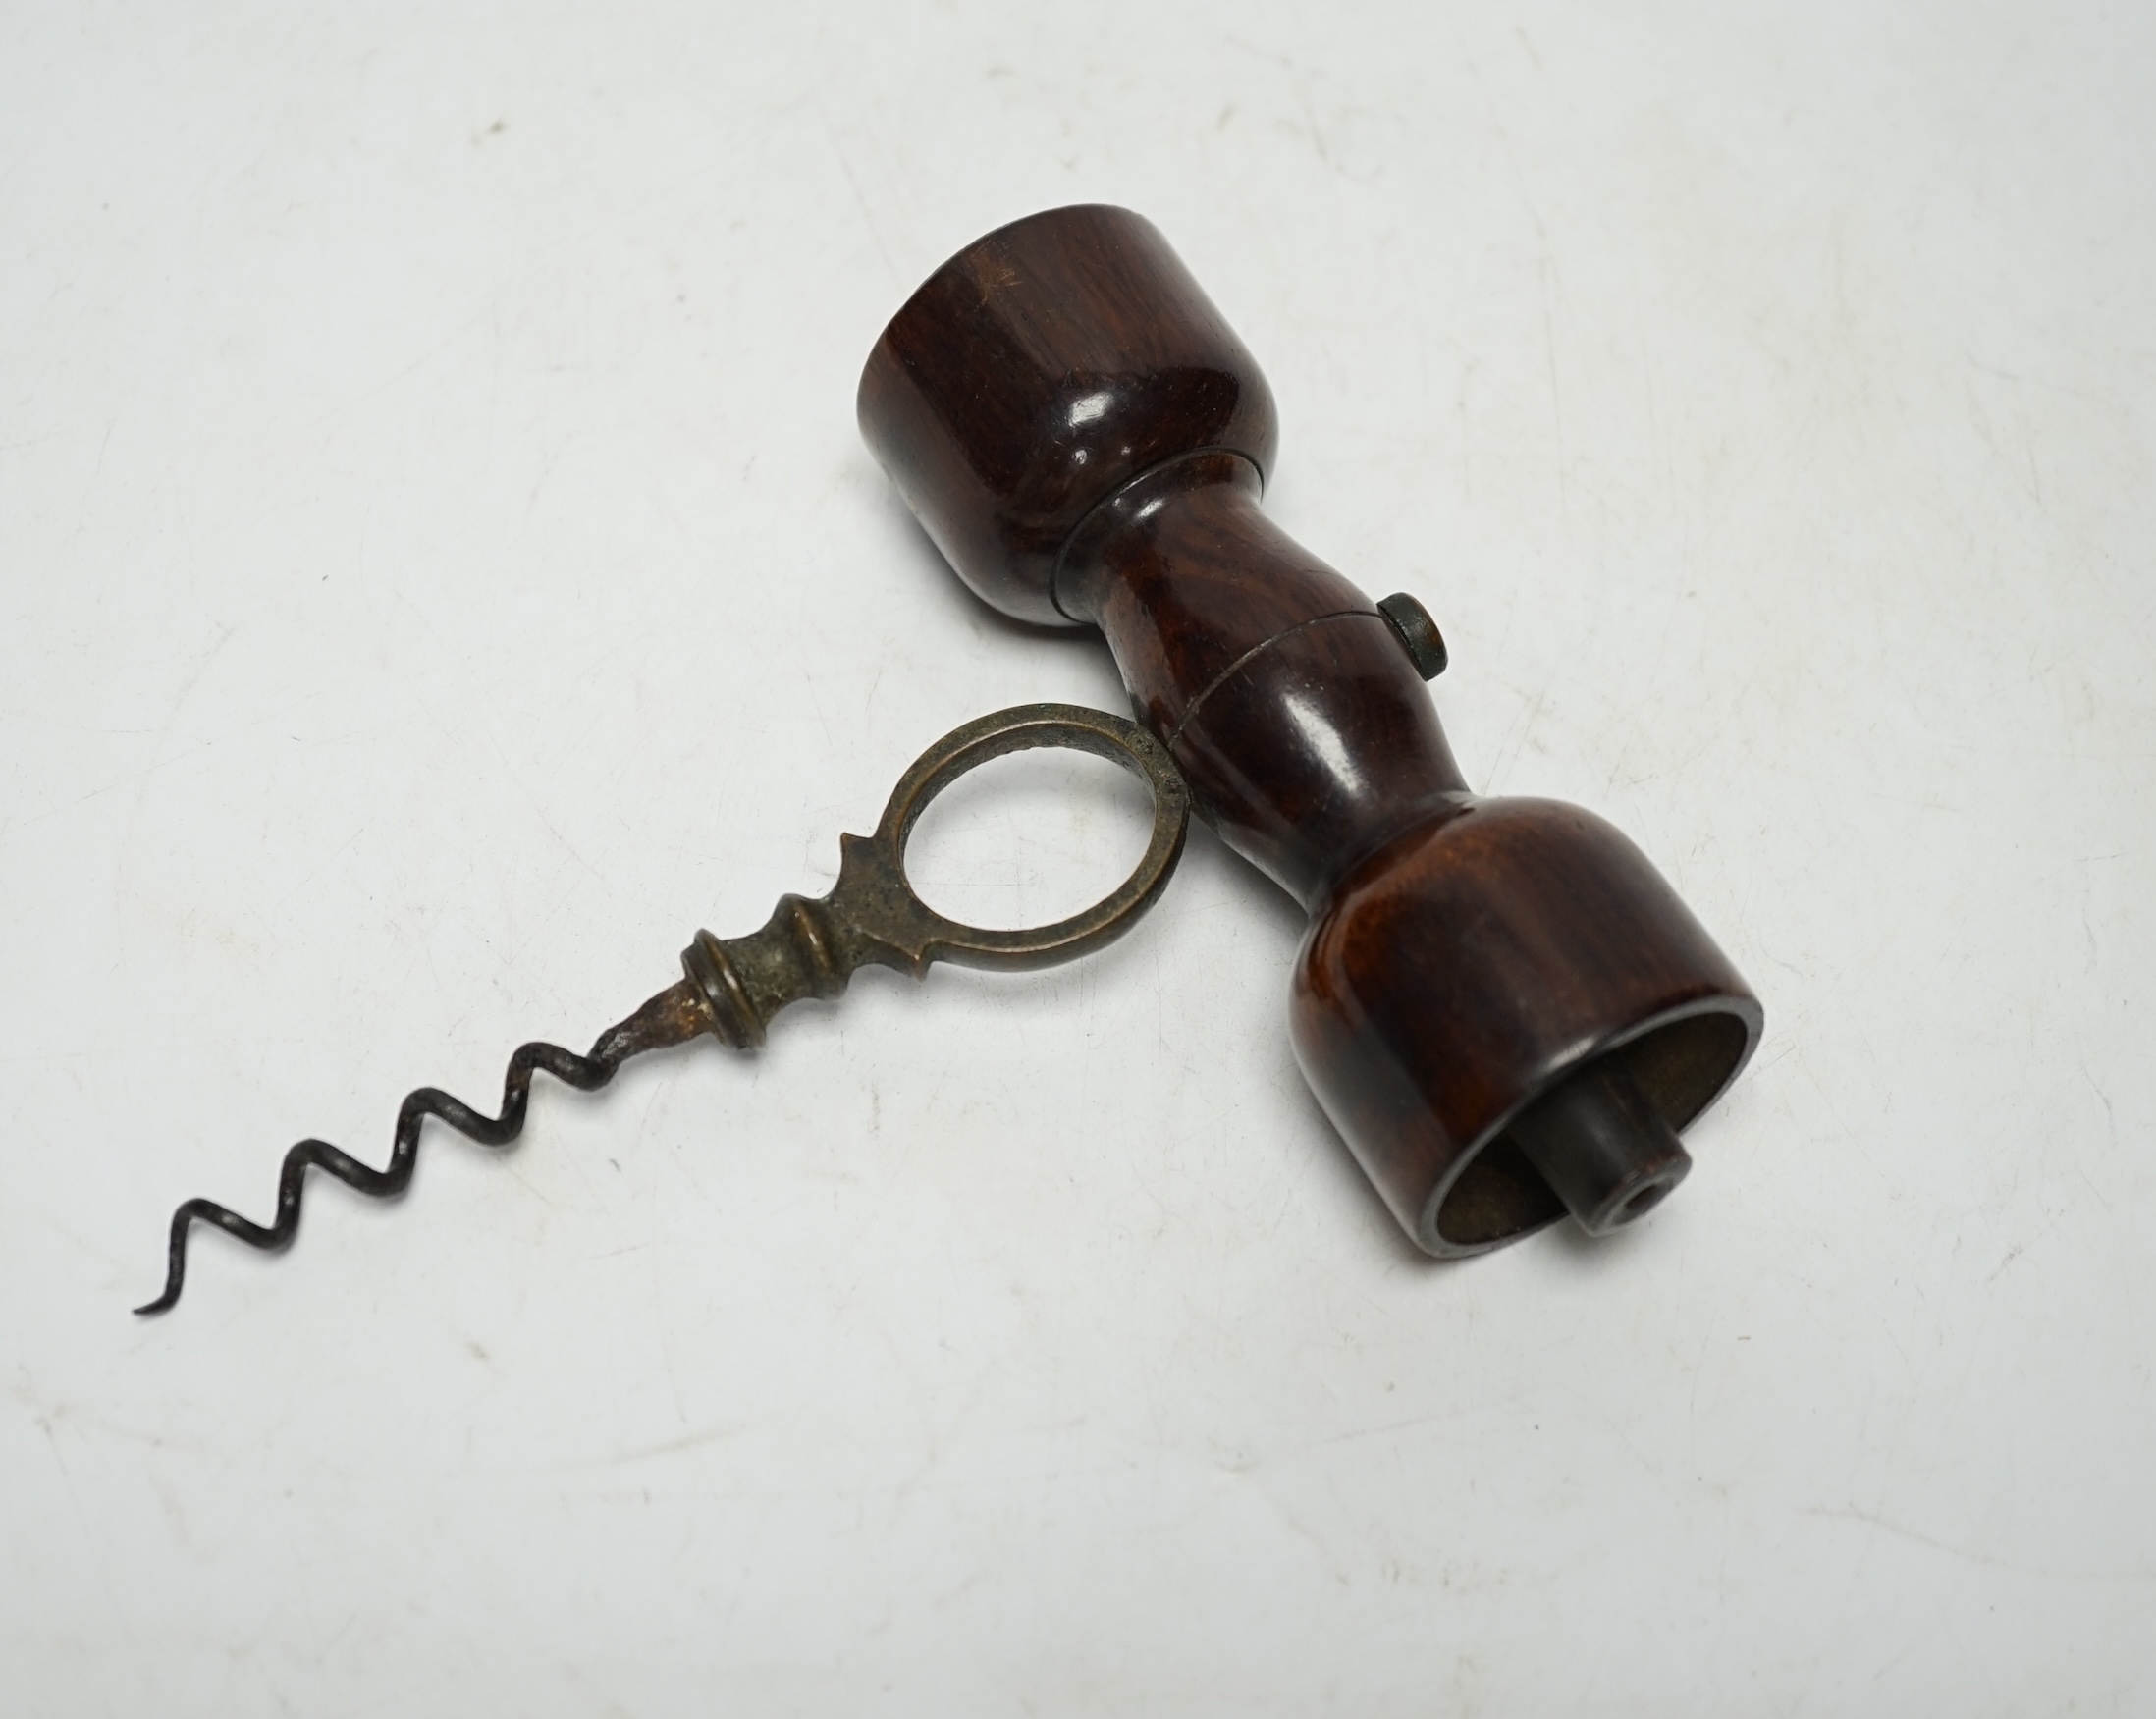 A Victorian rosewood-handled corkscrew, 15cm high